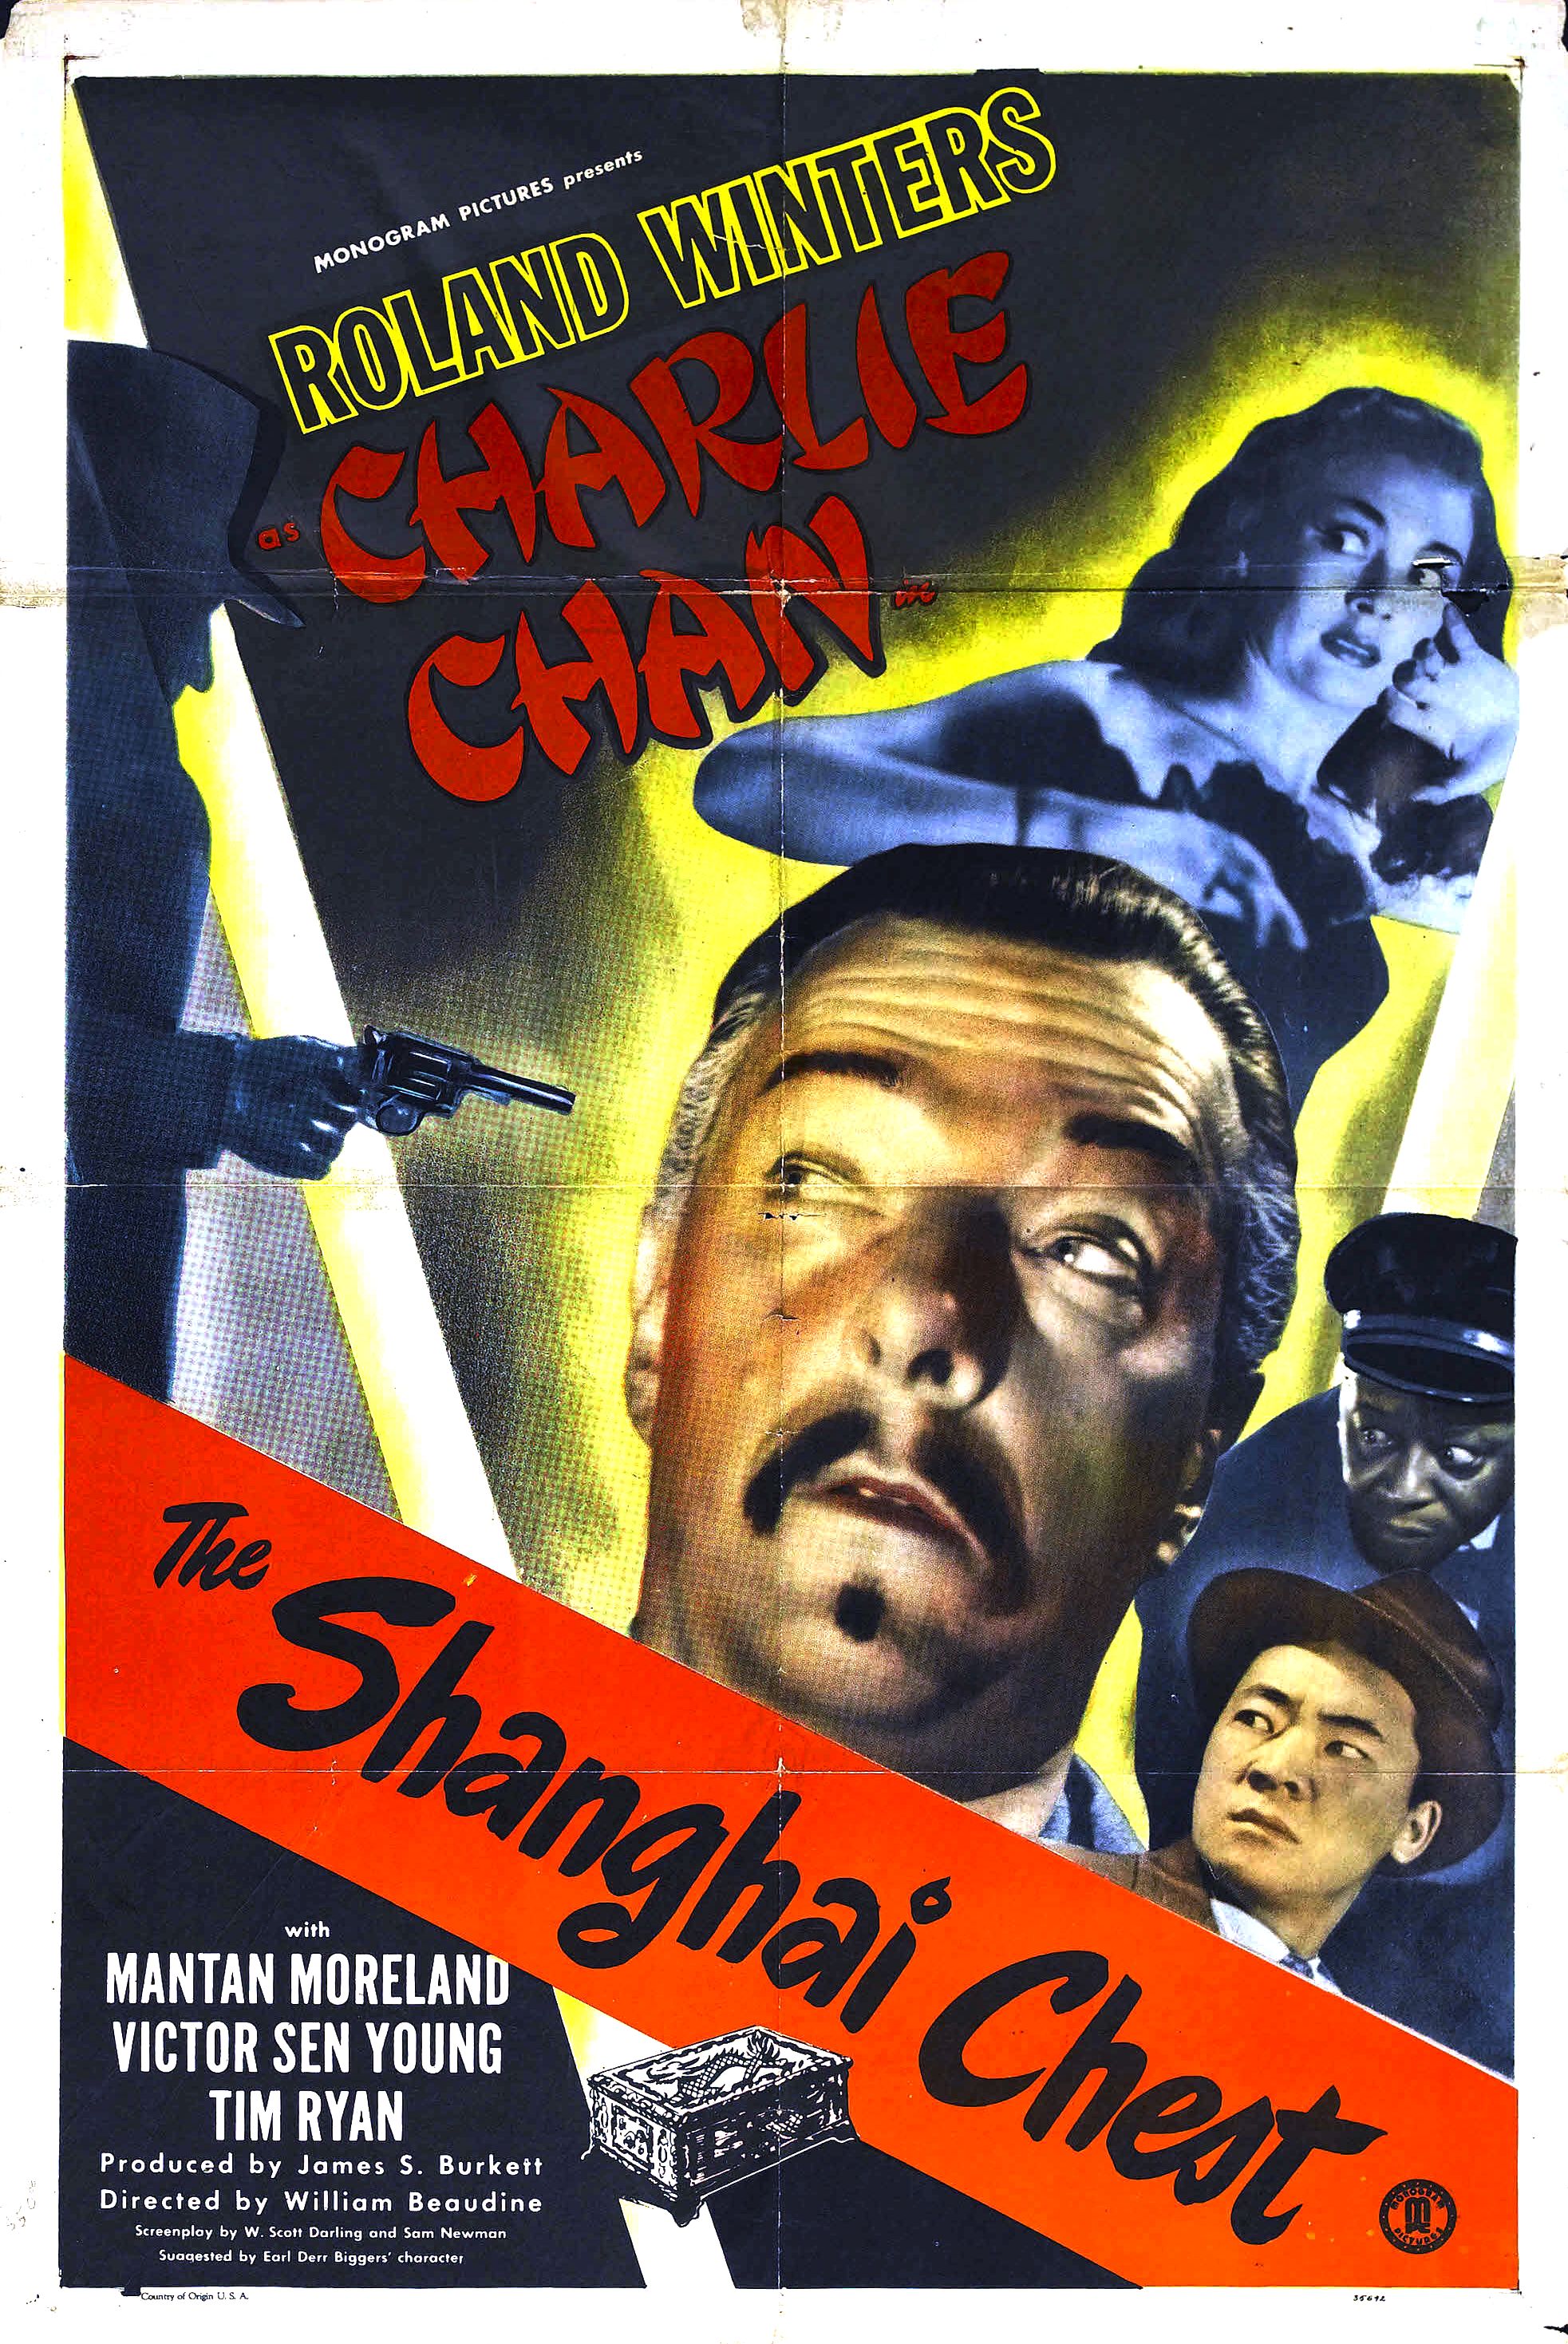 THE SHANGHAI CHEST (1948)